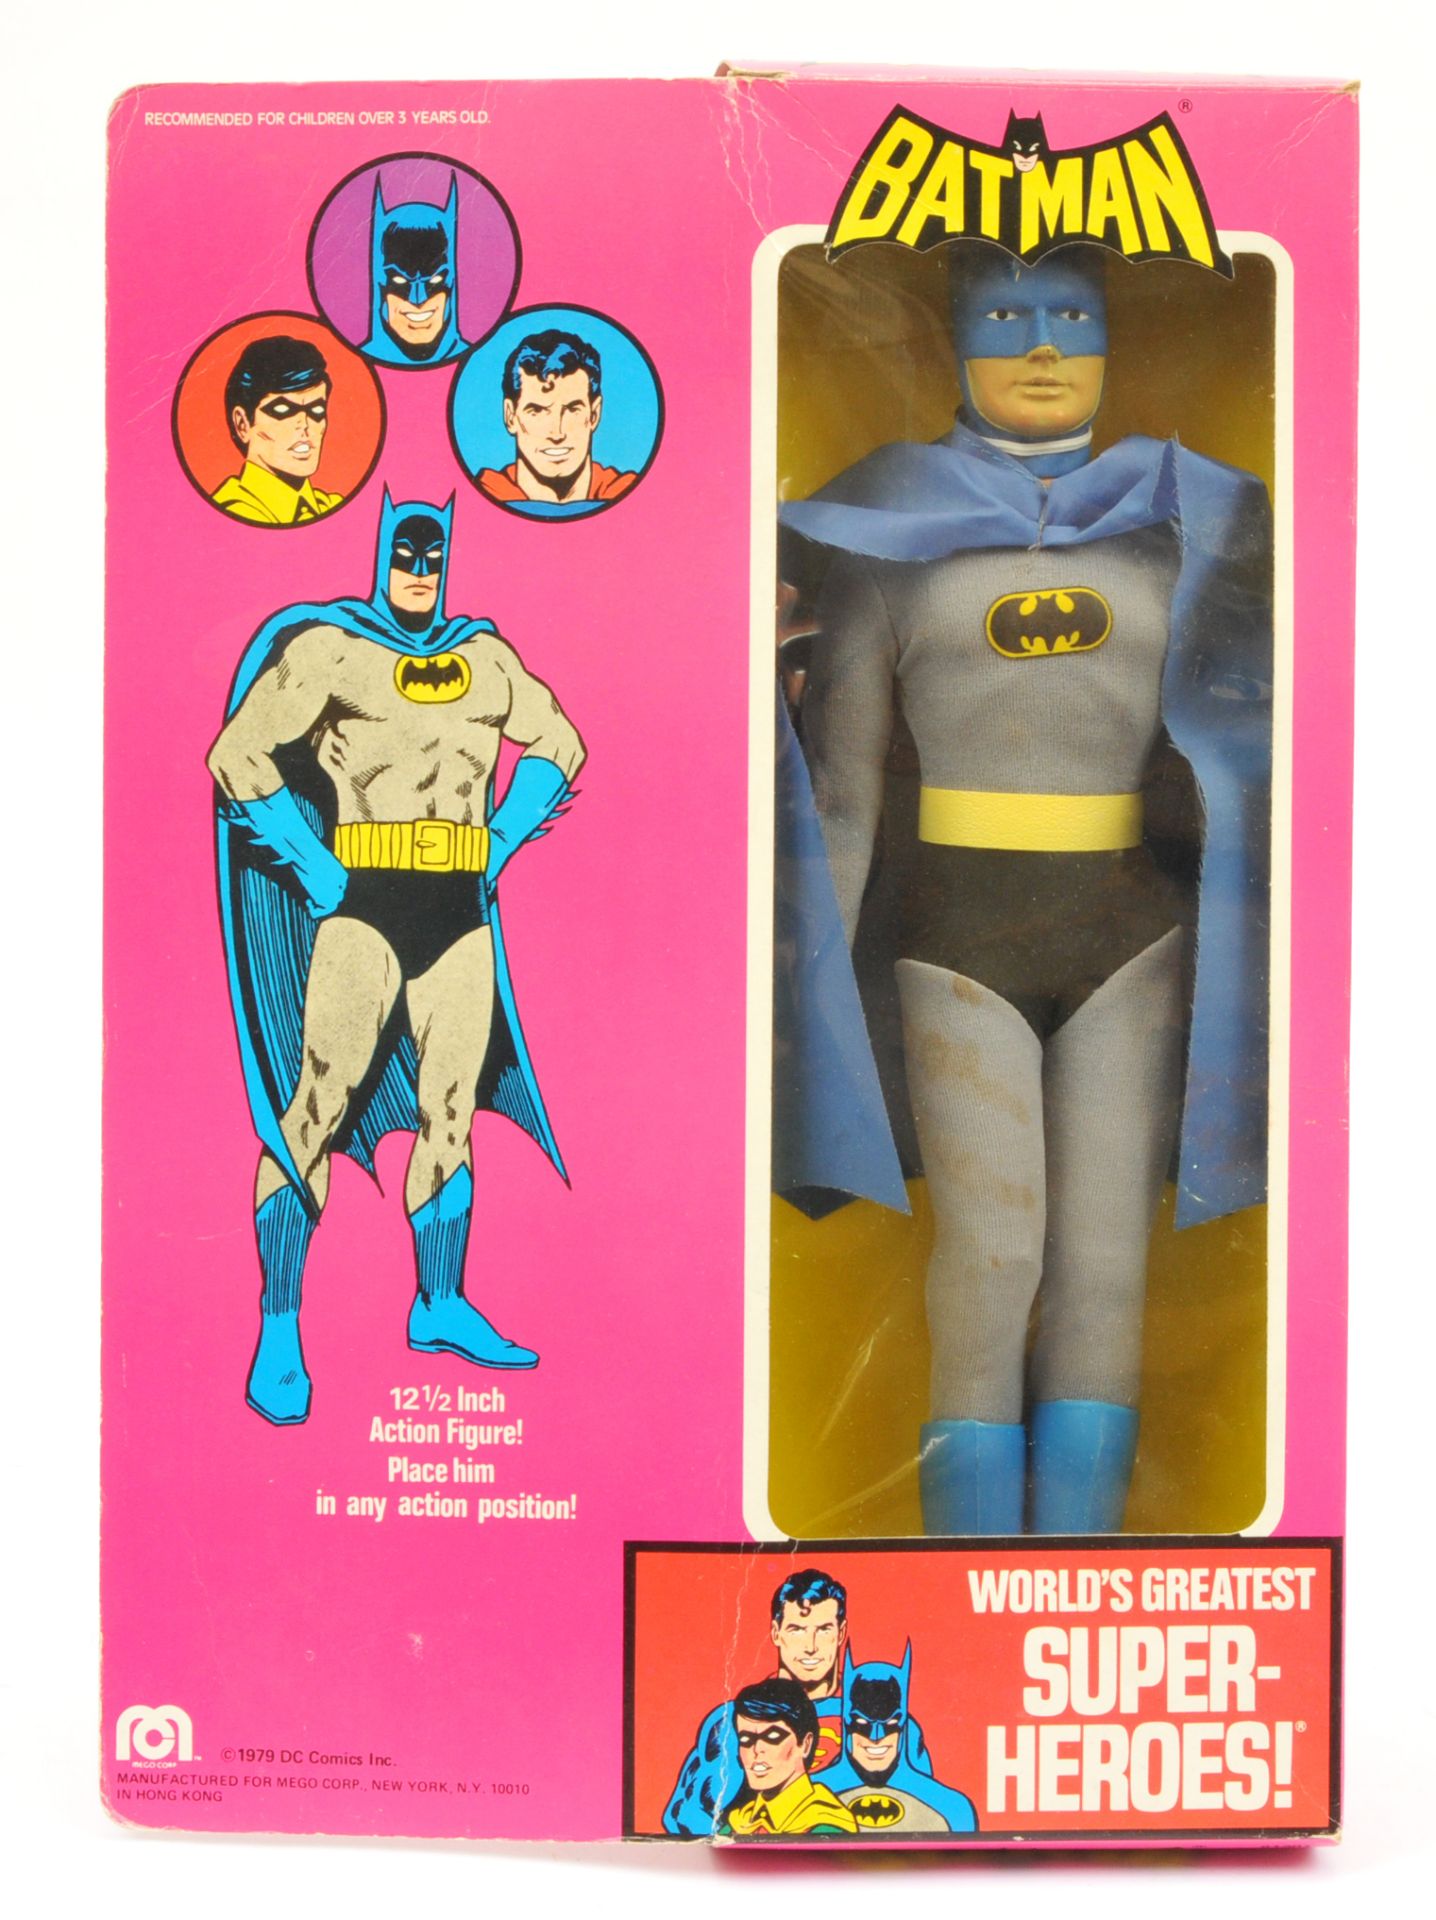 Mego vintage 12 1/2" poseable Batman figure